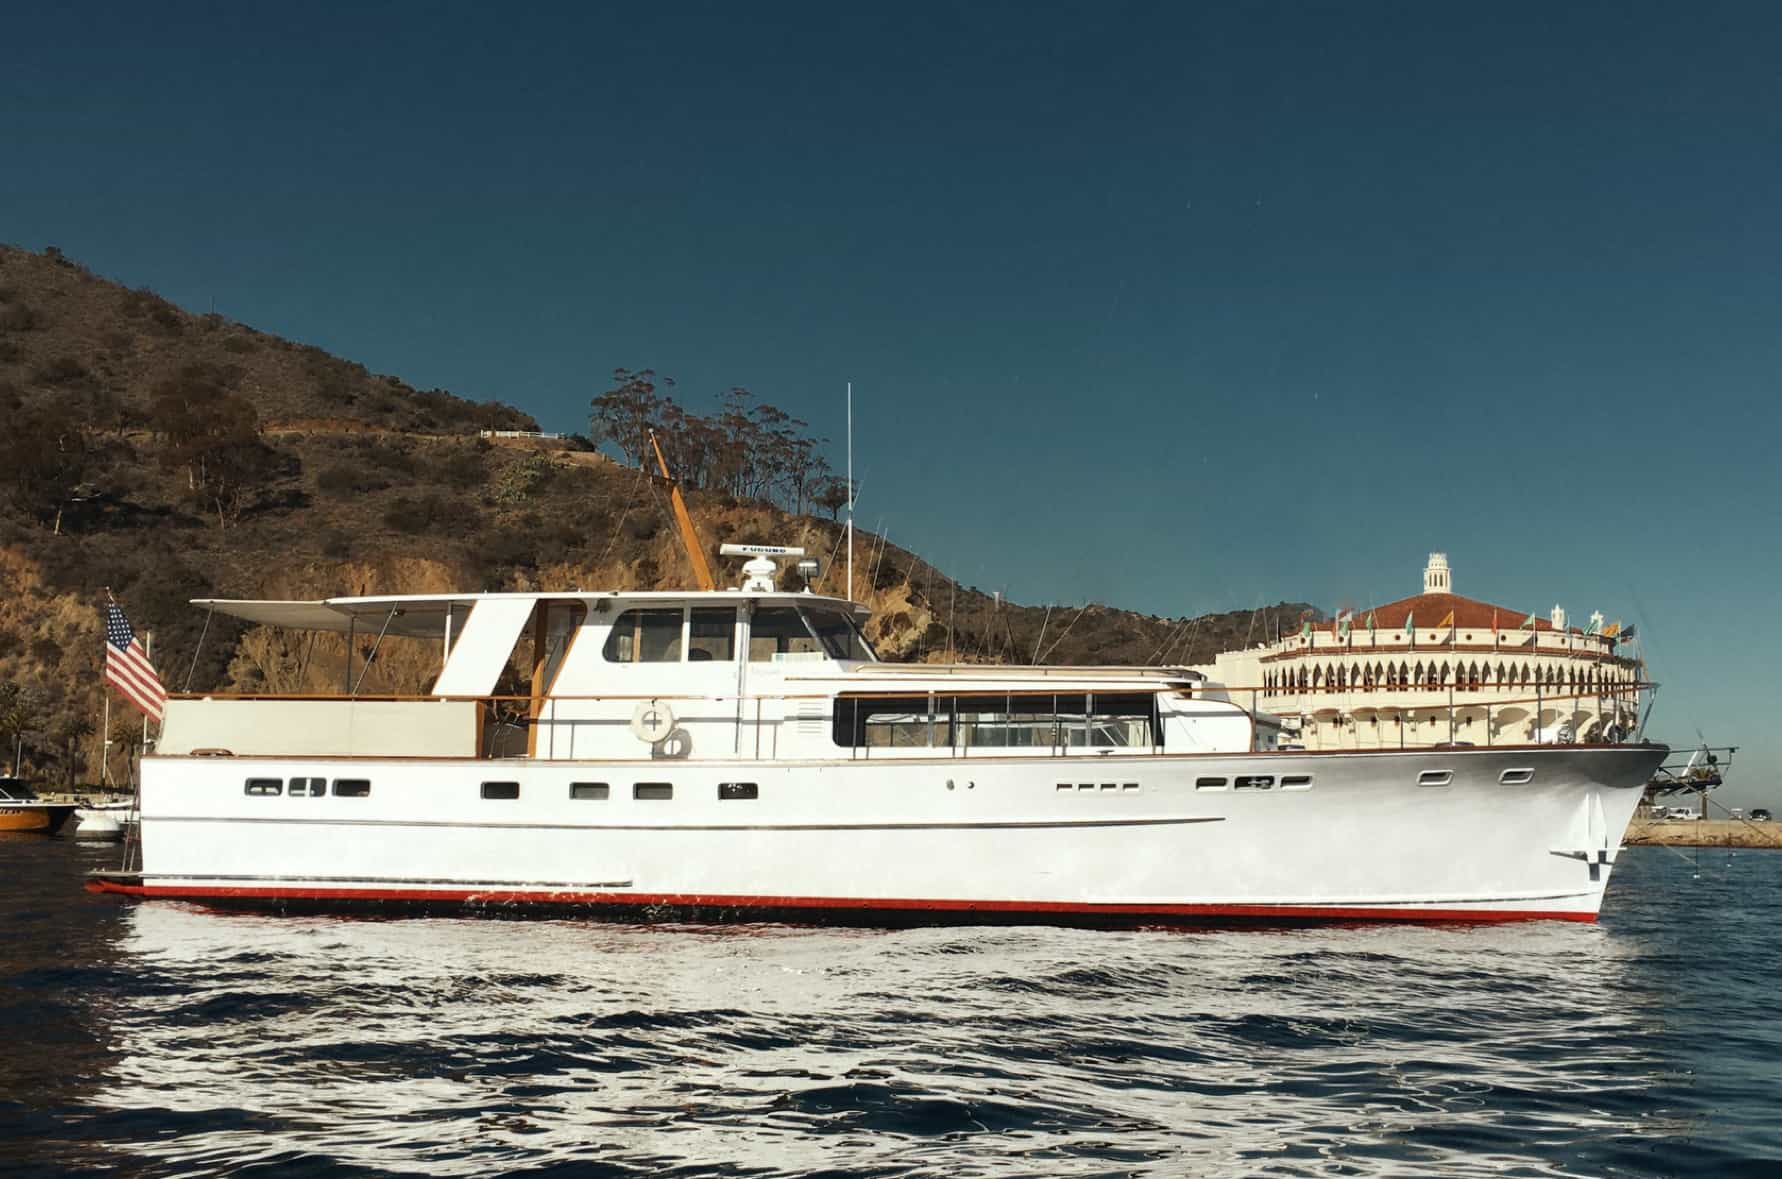 Unusual venue: luxury yacht